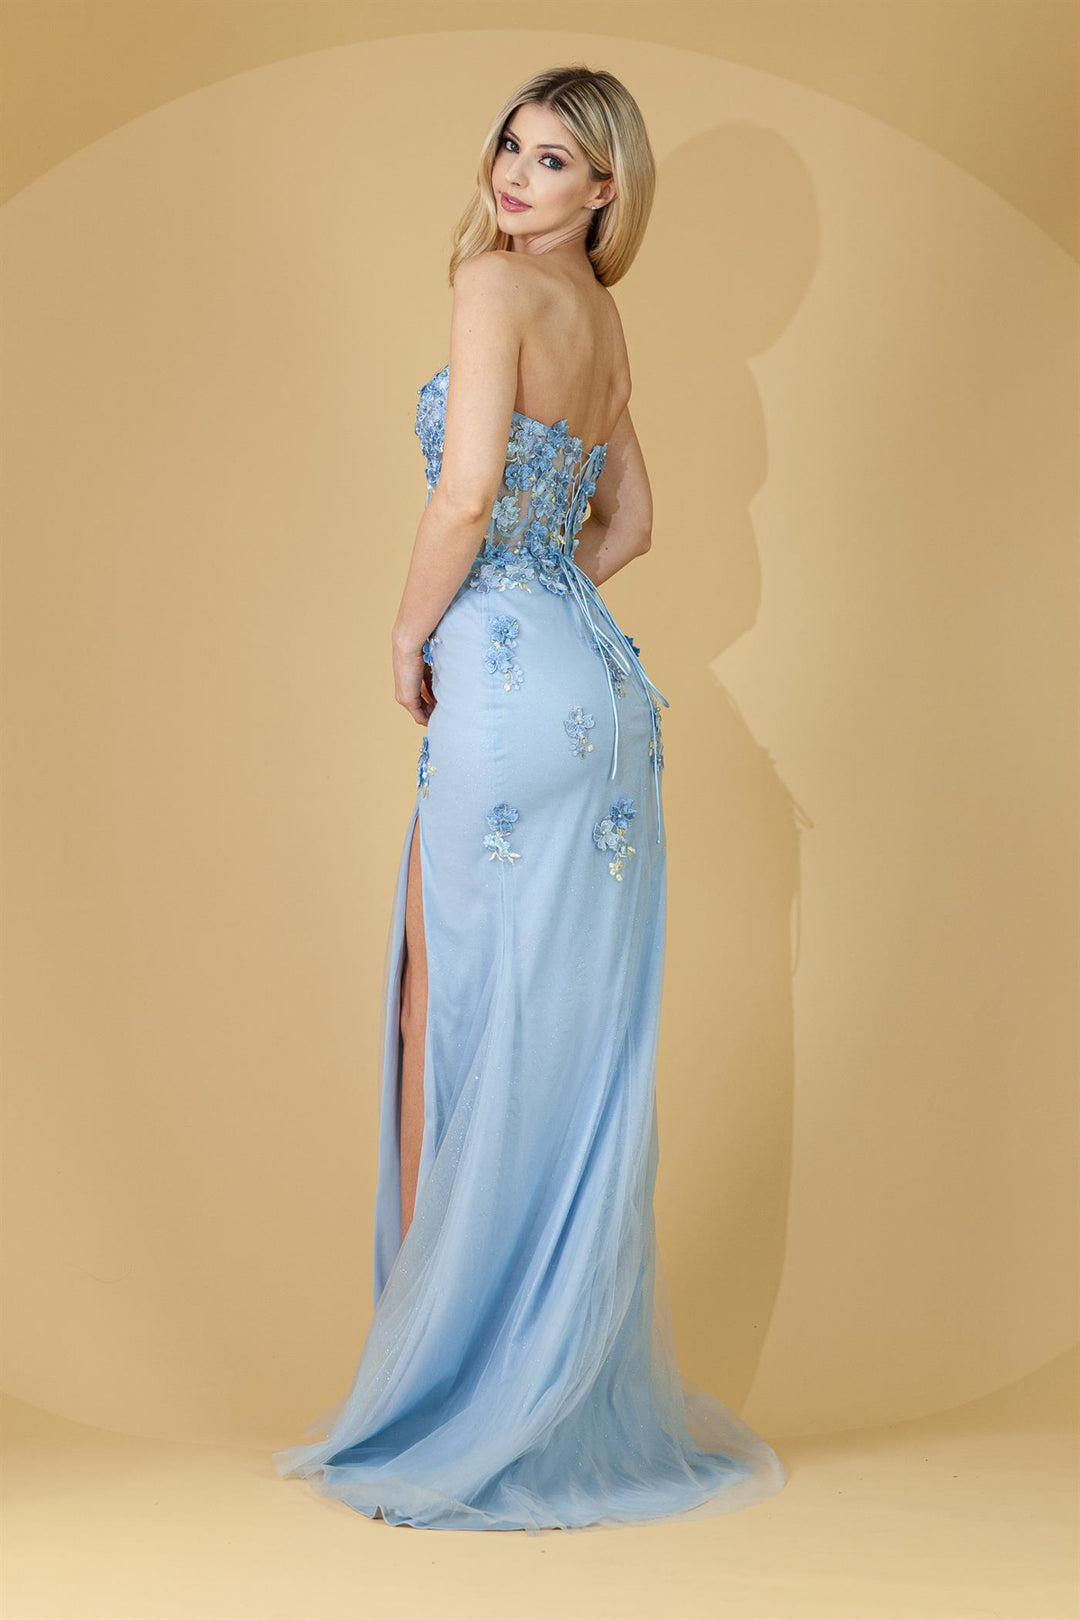 Floral Applique Strapless Corset Gown by Amelia Couture BZ9019